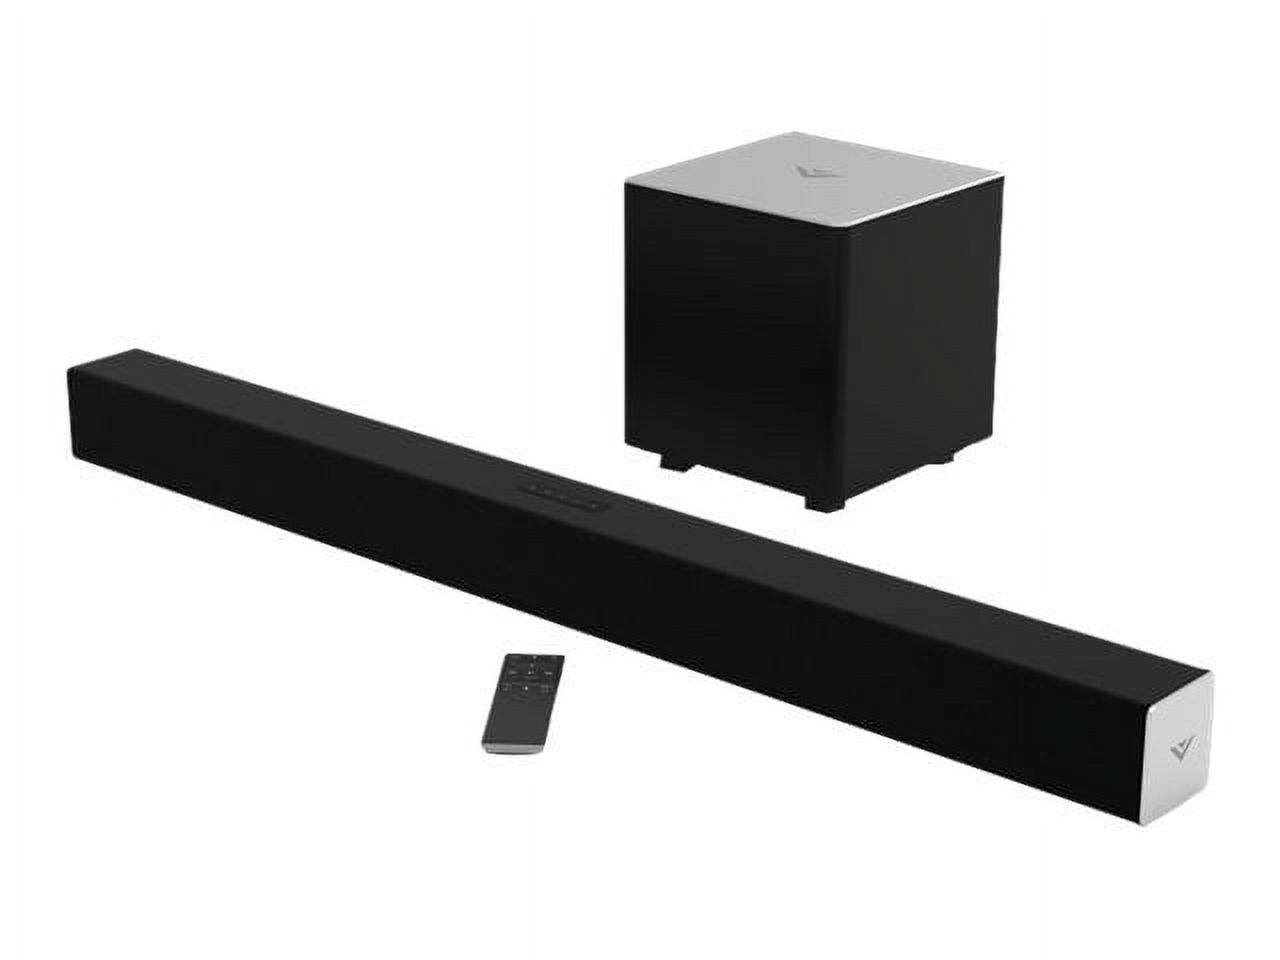 VIZIO SmartCast 38" SB3831-D0 - Sound bar system - for TV - 3.1-channel - wireless - Ethernet, Wi-Fi, Bluetooth - black - image 3 of 10